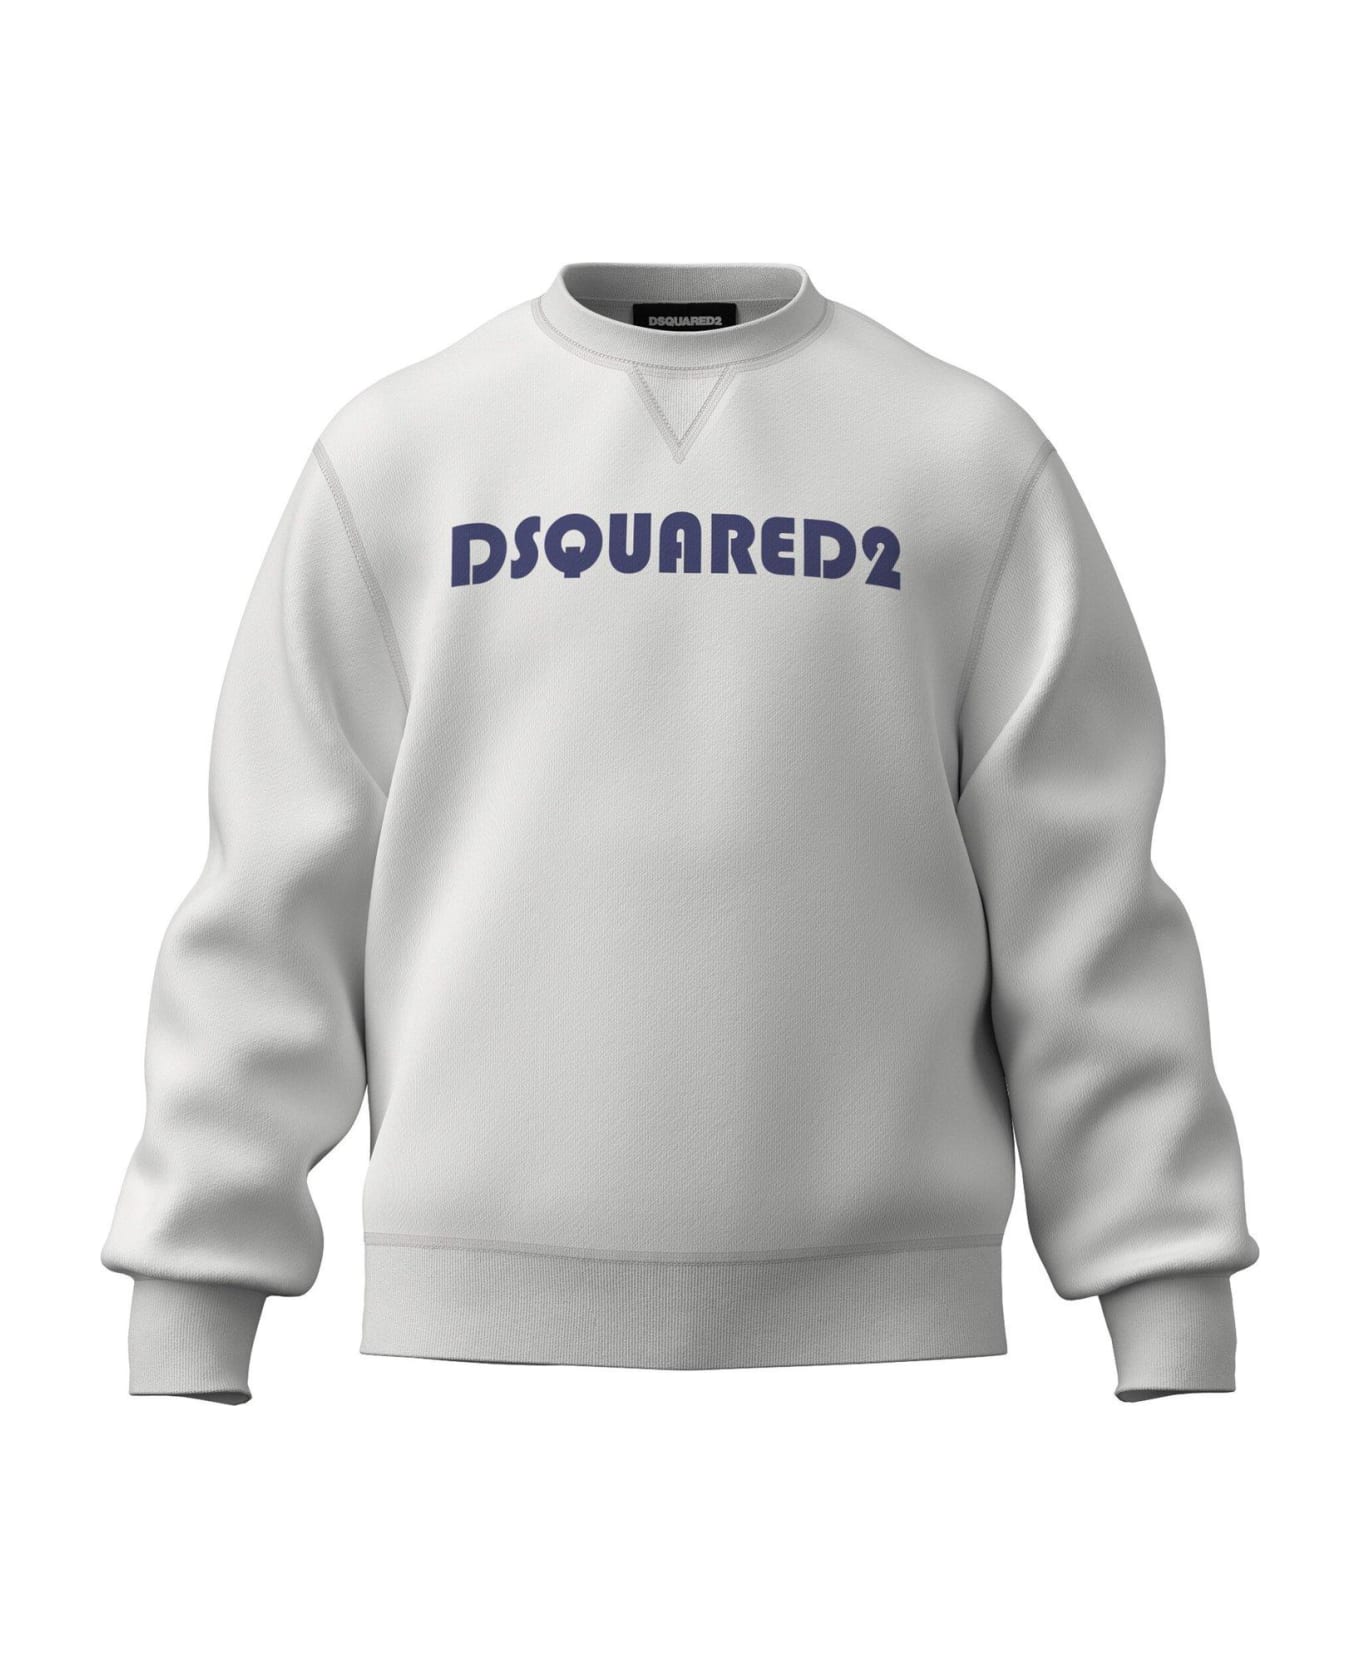 Dsquared2 Logo Printed Crewneck Sweatshirt - White